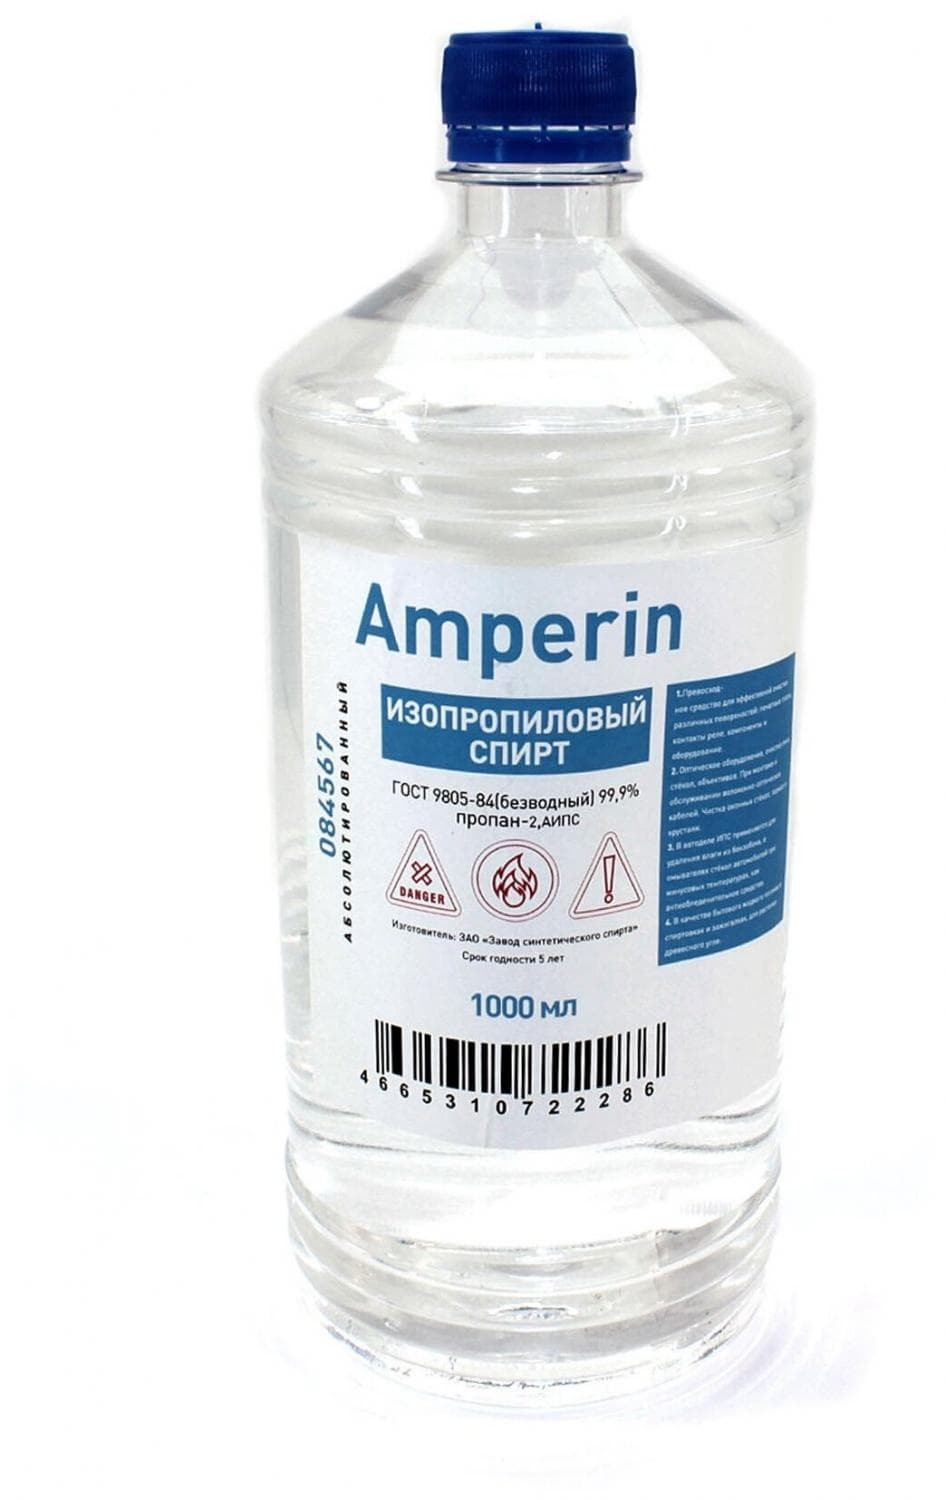 спирт изопропиловый amperin, 1000 мл